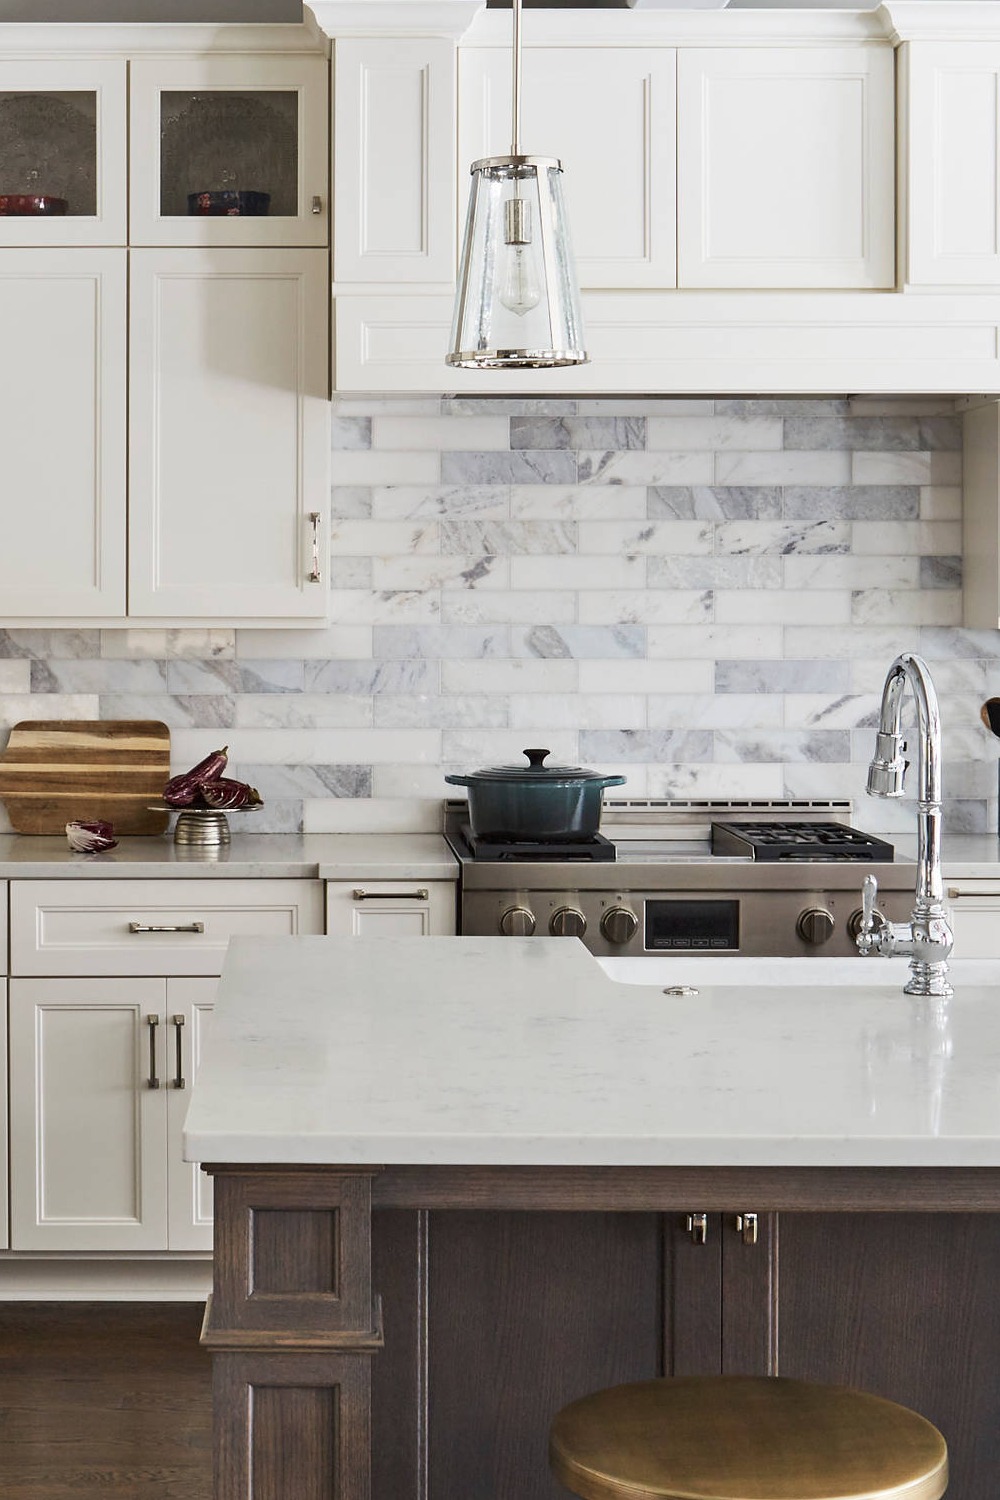 Stainless Steel Appliances Subway Tile Backsplash Honed Marble Countertops Clean Aesthetic